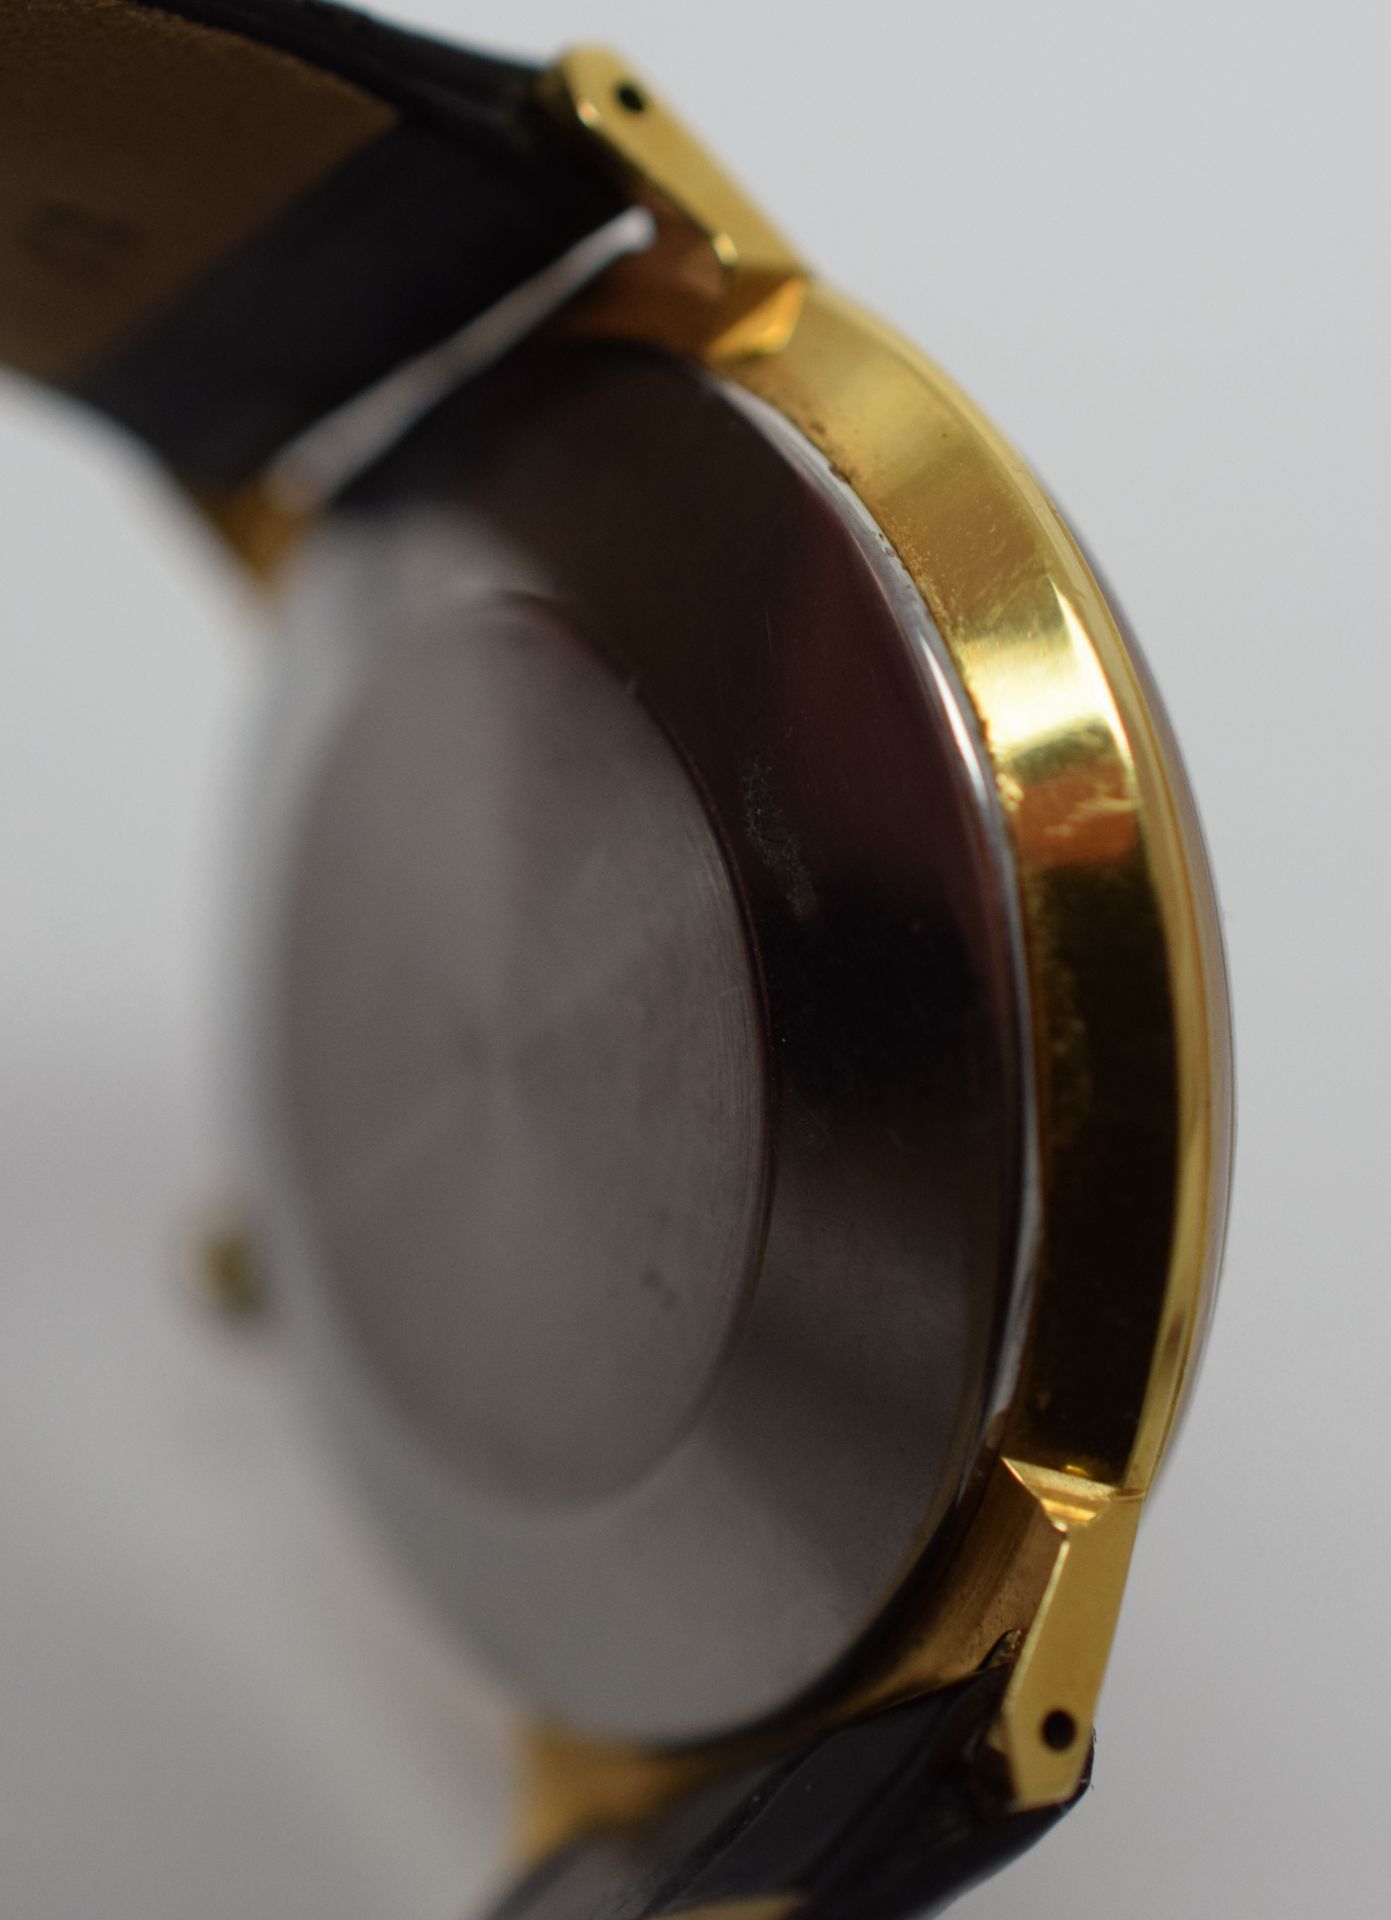 Vintage Gentleman's Smiths Astral Wristwatch - Image 6 of 6